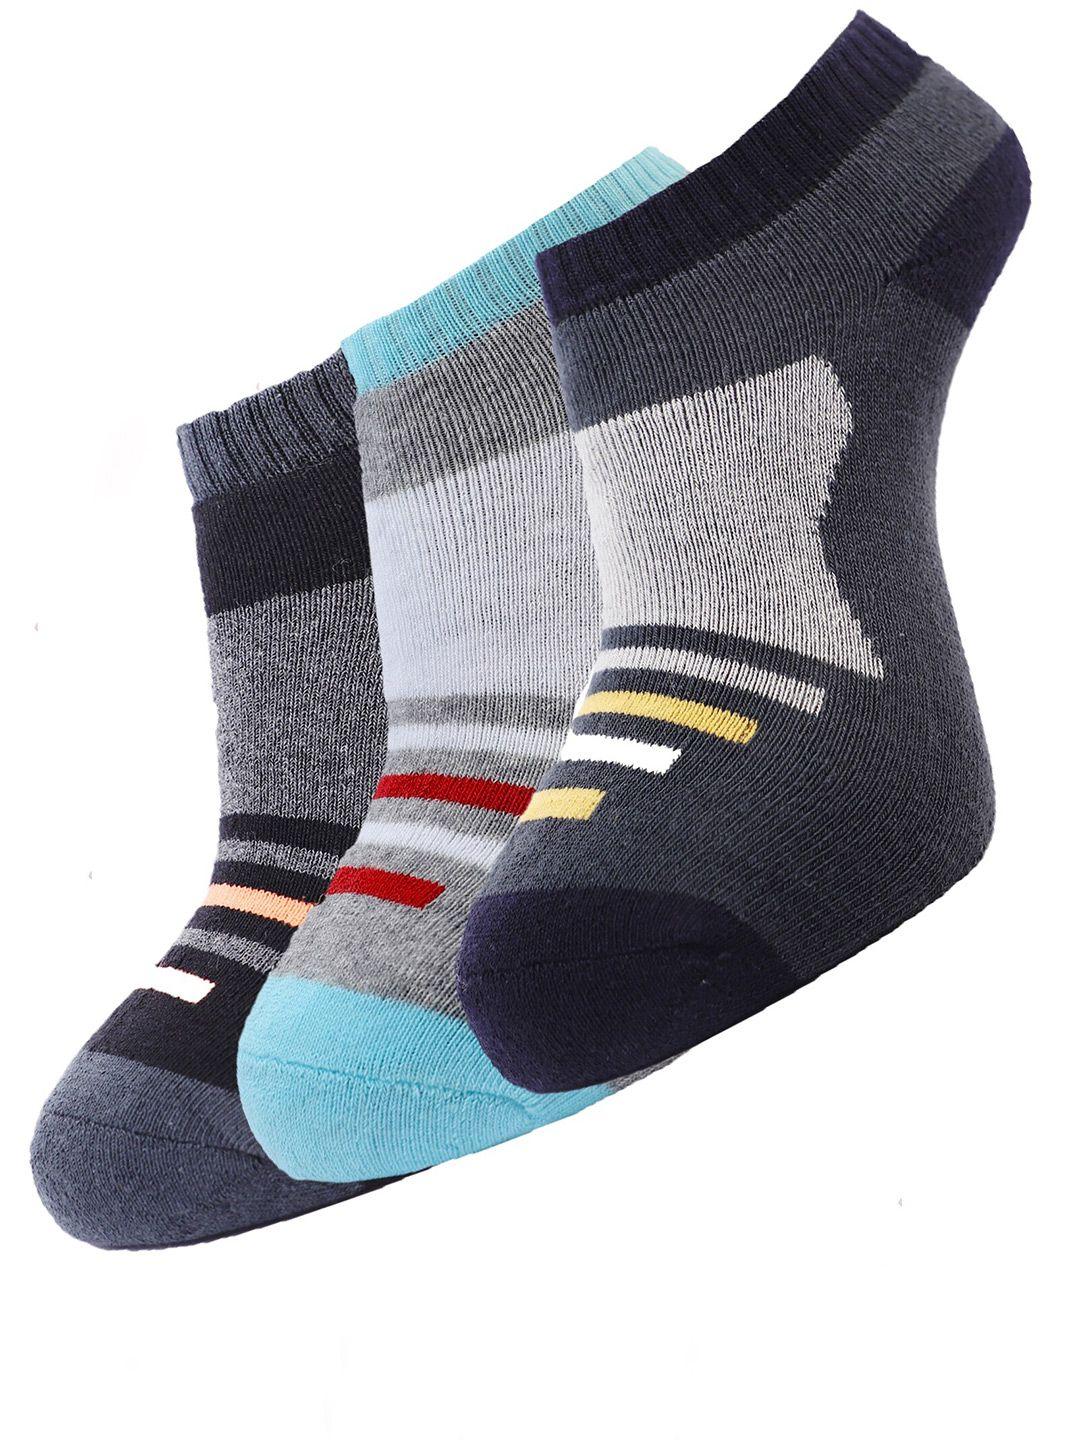 dollar-socks-men-pack-of-3-assorted-patterned-cotton-ankle-length-socks